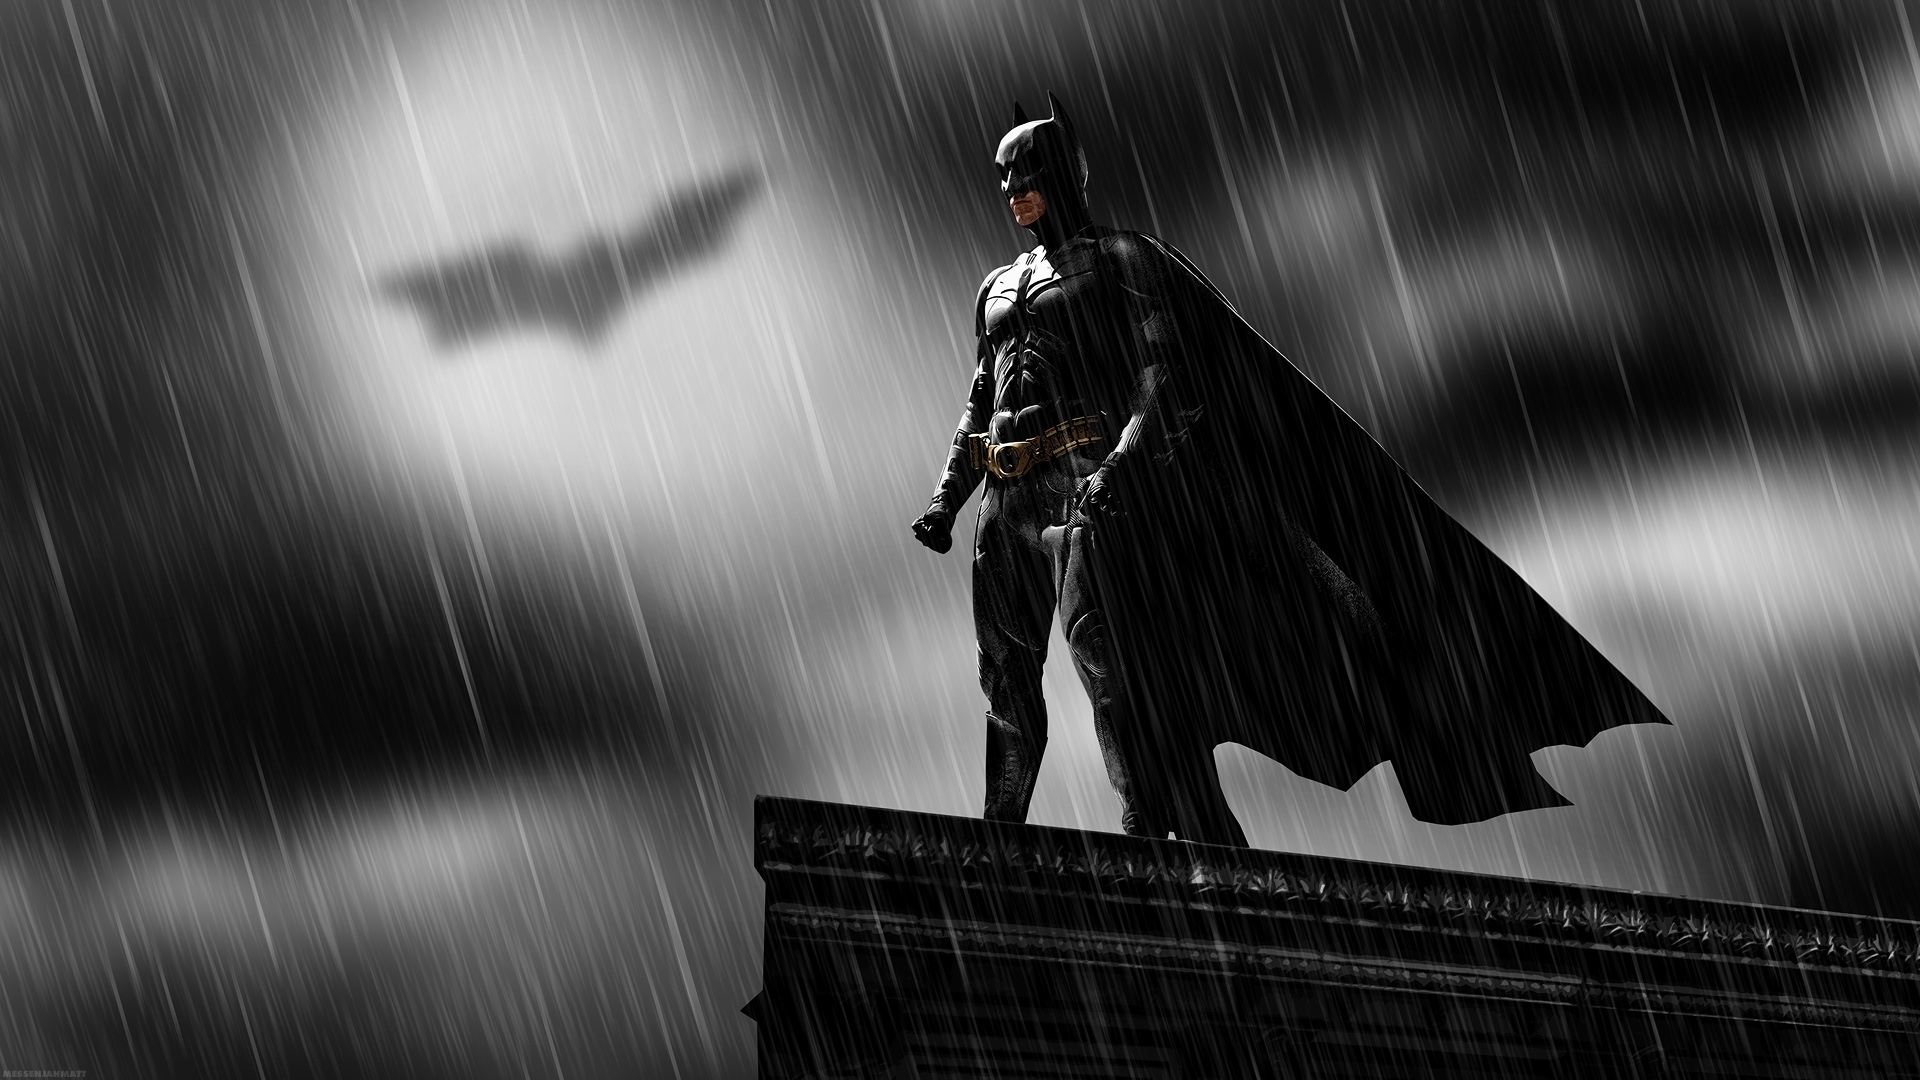 Wallpapers Epic Batman In The Rain P Hd Quality 1920x1080 ...